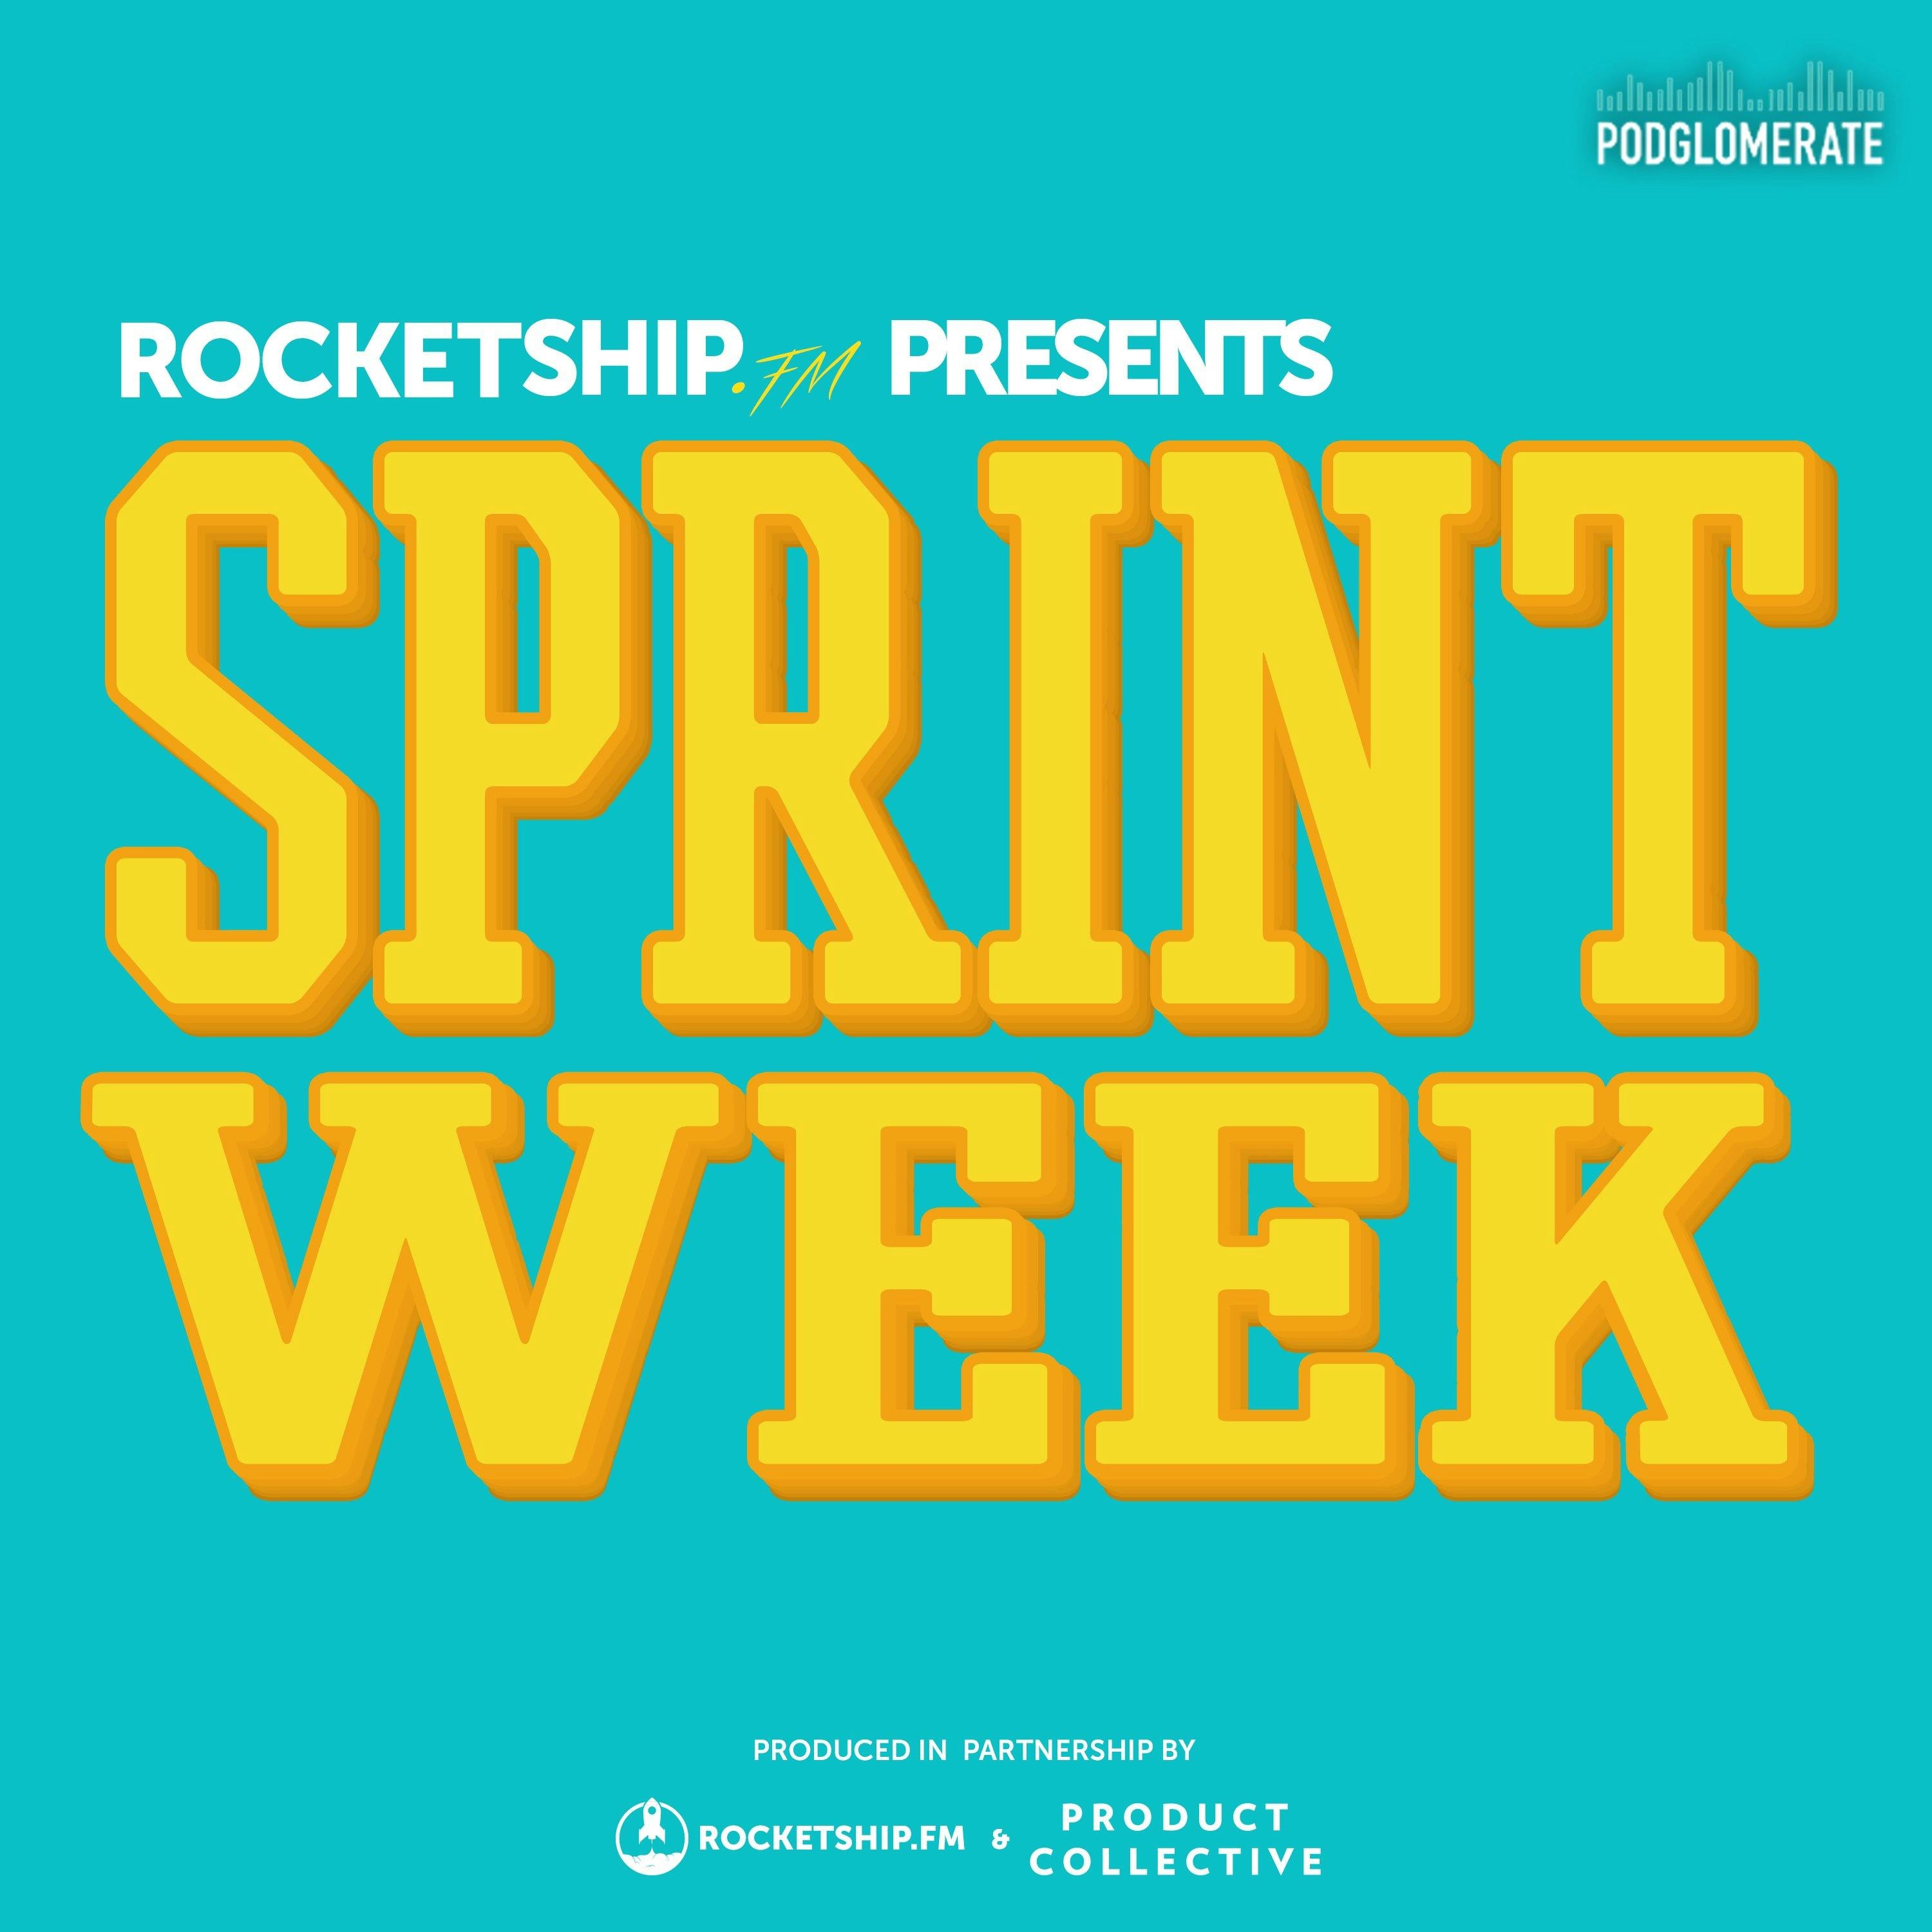 Sprint Week: Day 2 "Storyboarding"